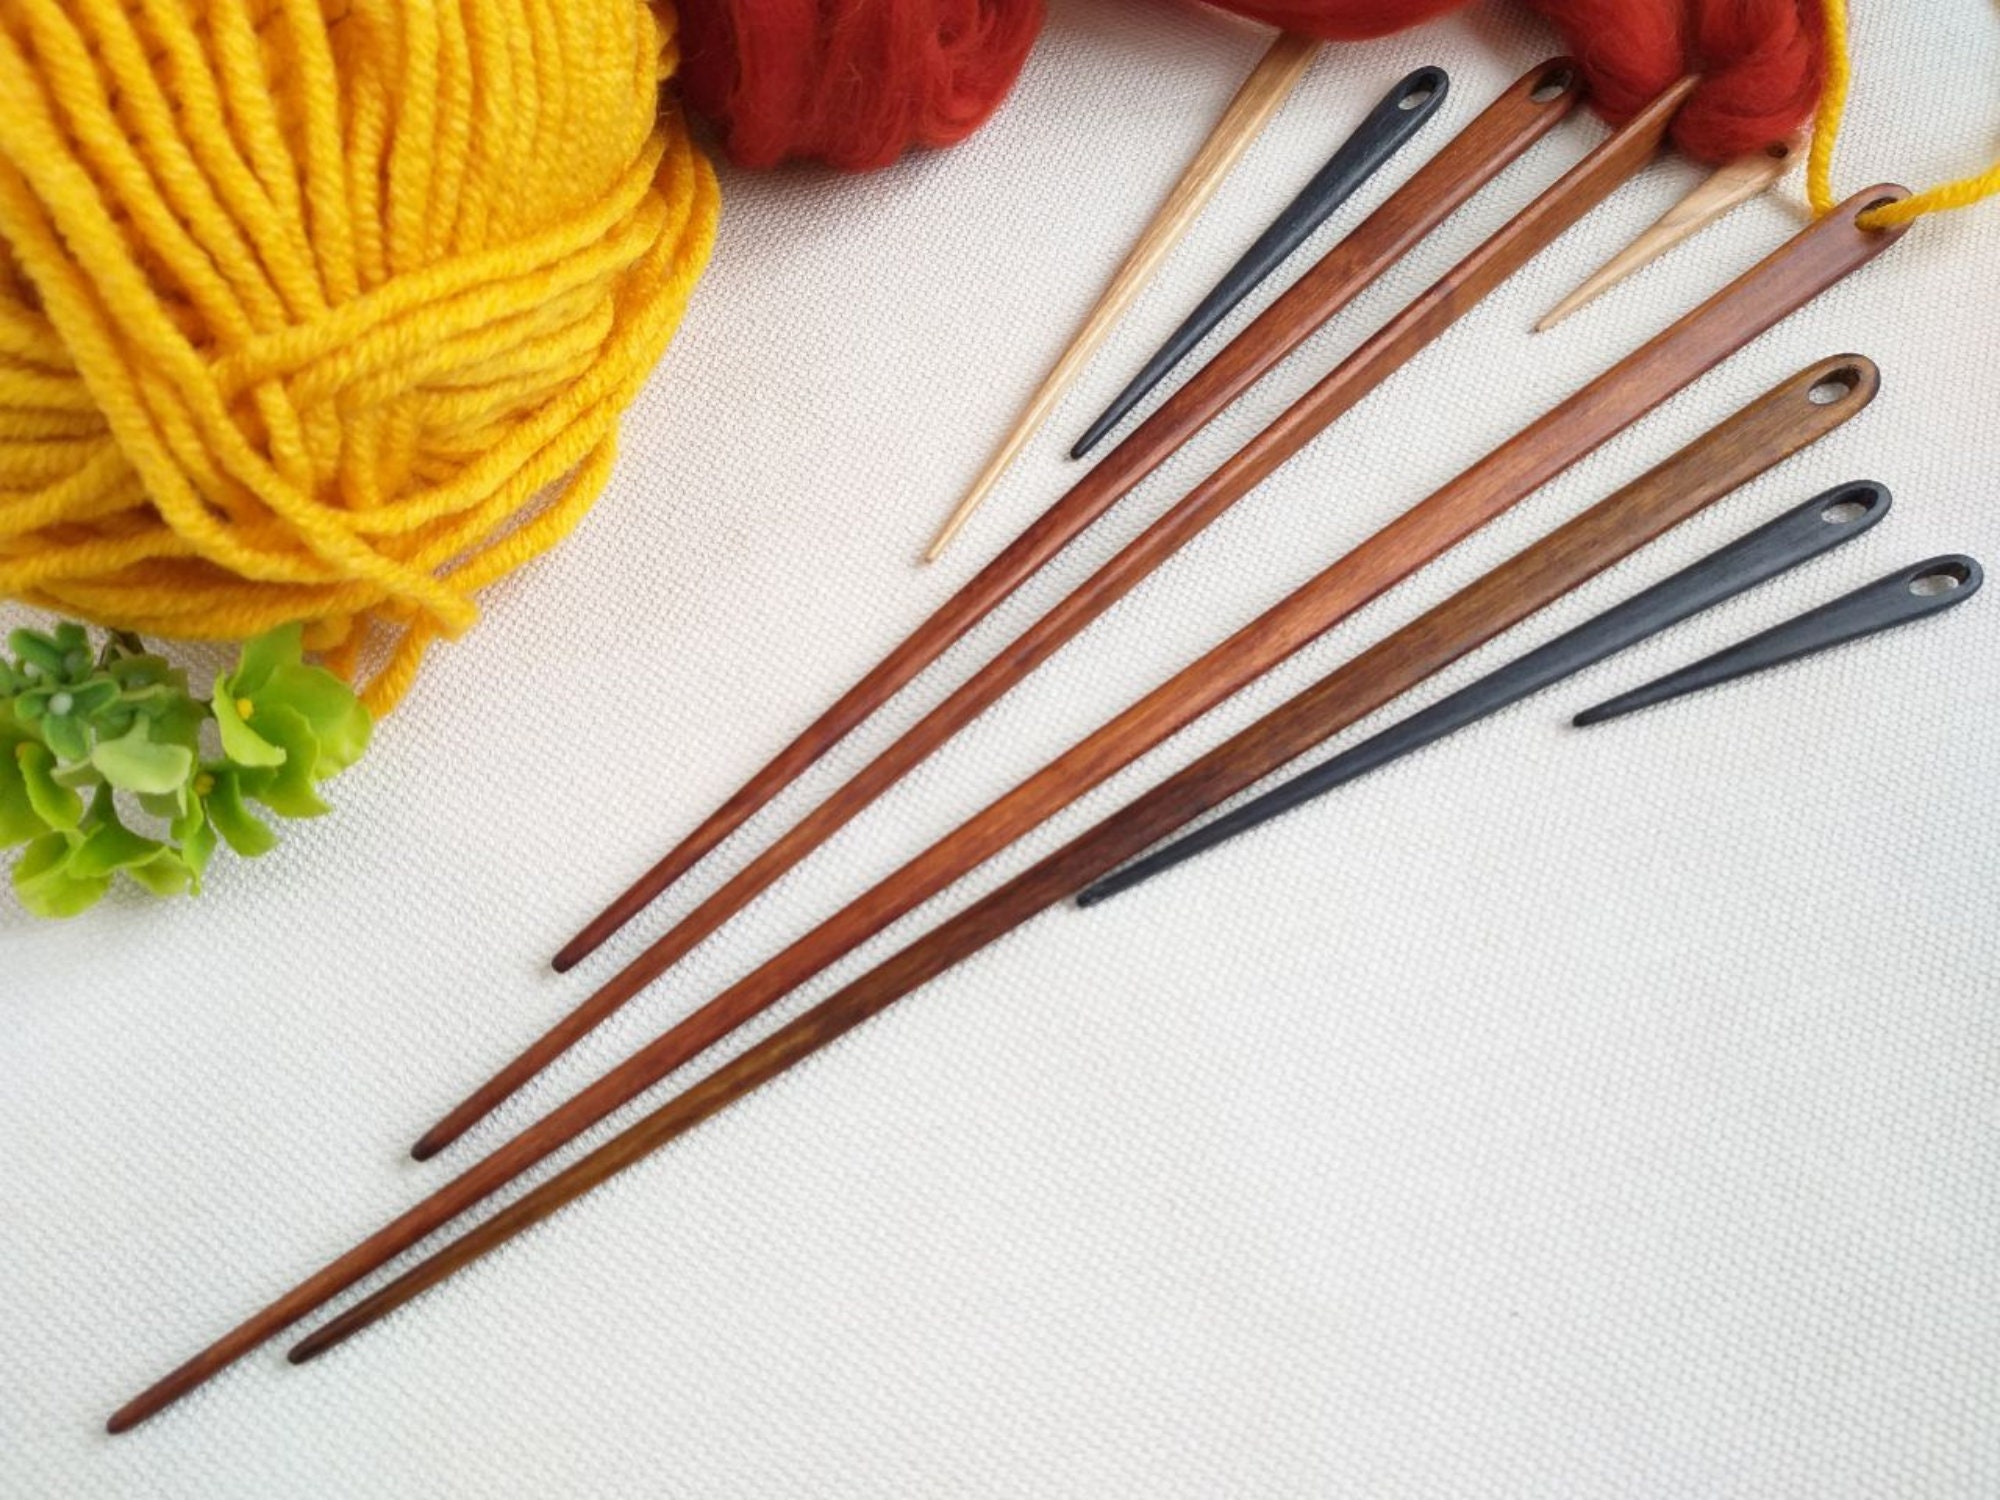 Wholesale Iron Tapestry Needles 